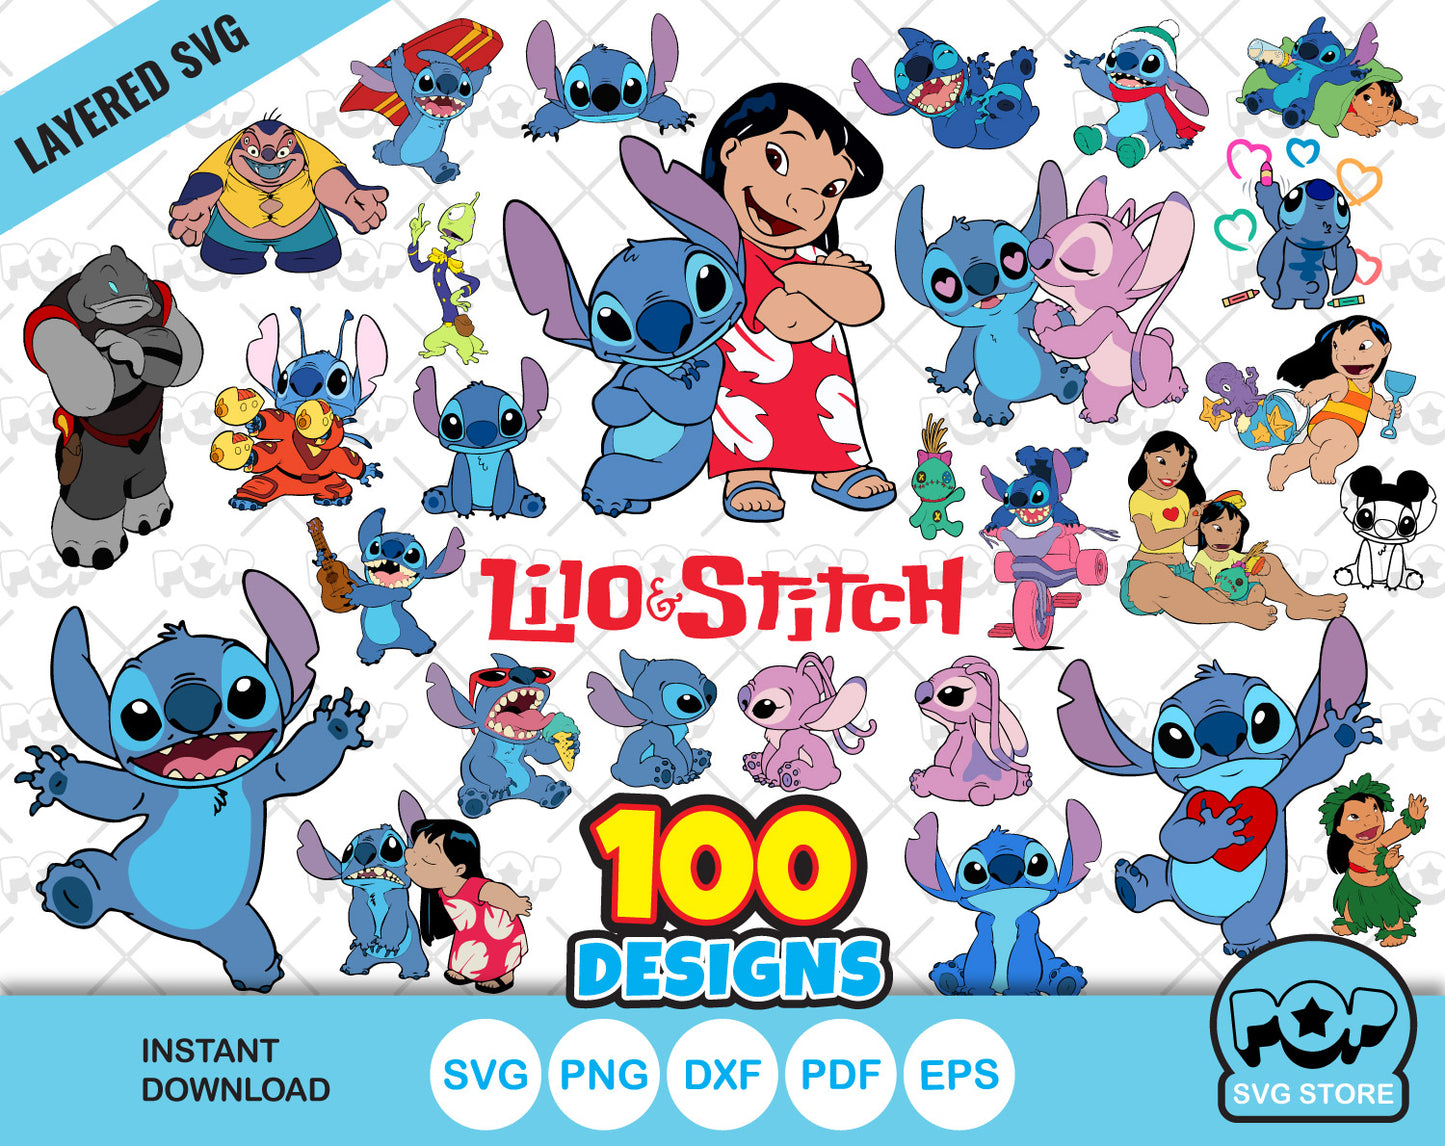 Disney Stitch SVG Digital File Bundle, Stitch Layered Svg